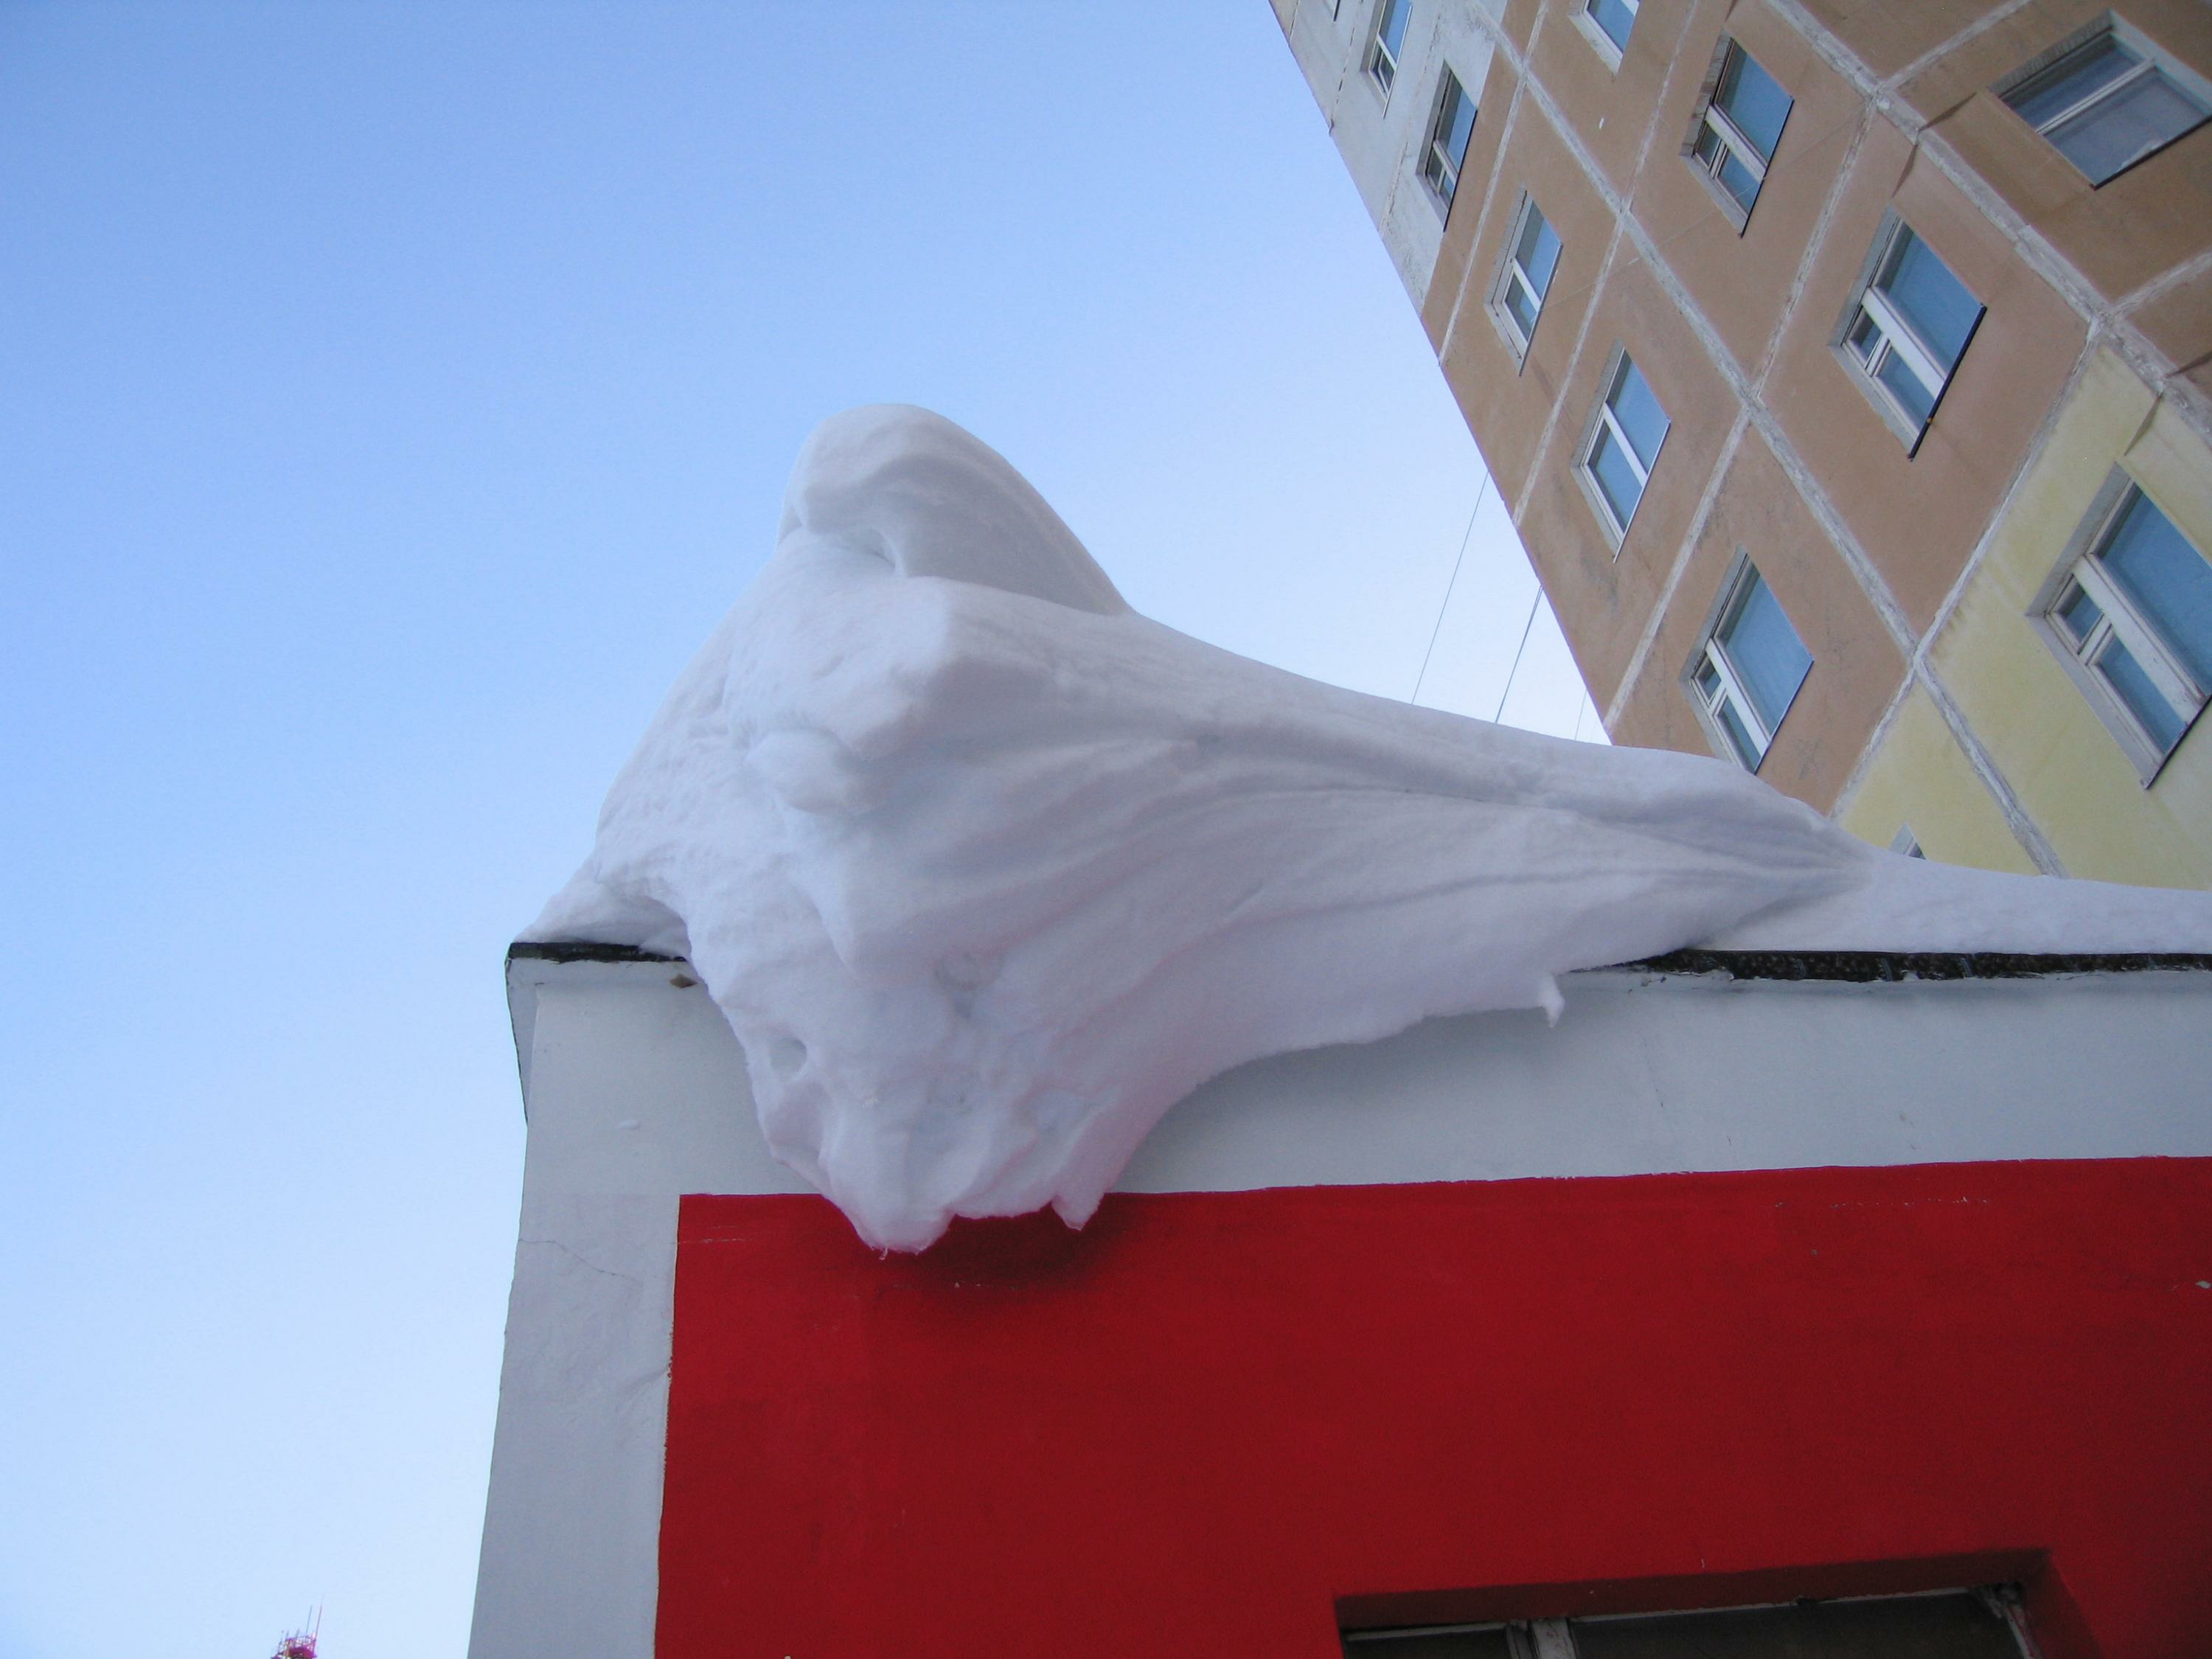 Снег с крыши на голову. Глыба льда на крыше. Сход снега с крыши. Падение снега с крыши. Глыба снега на крыше.